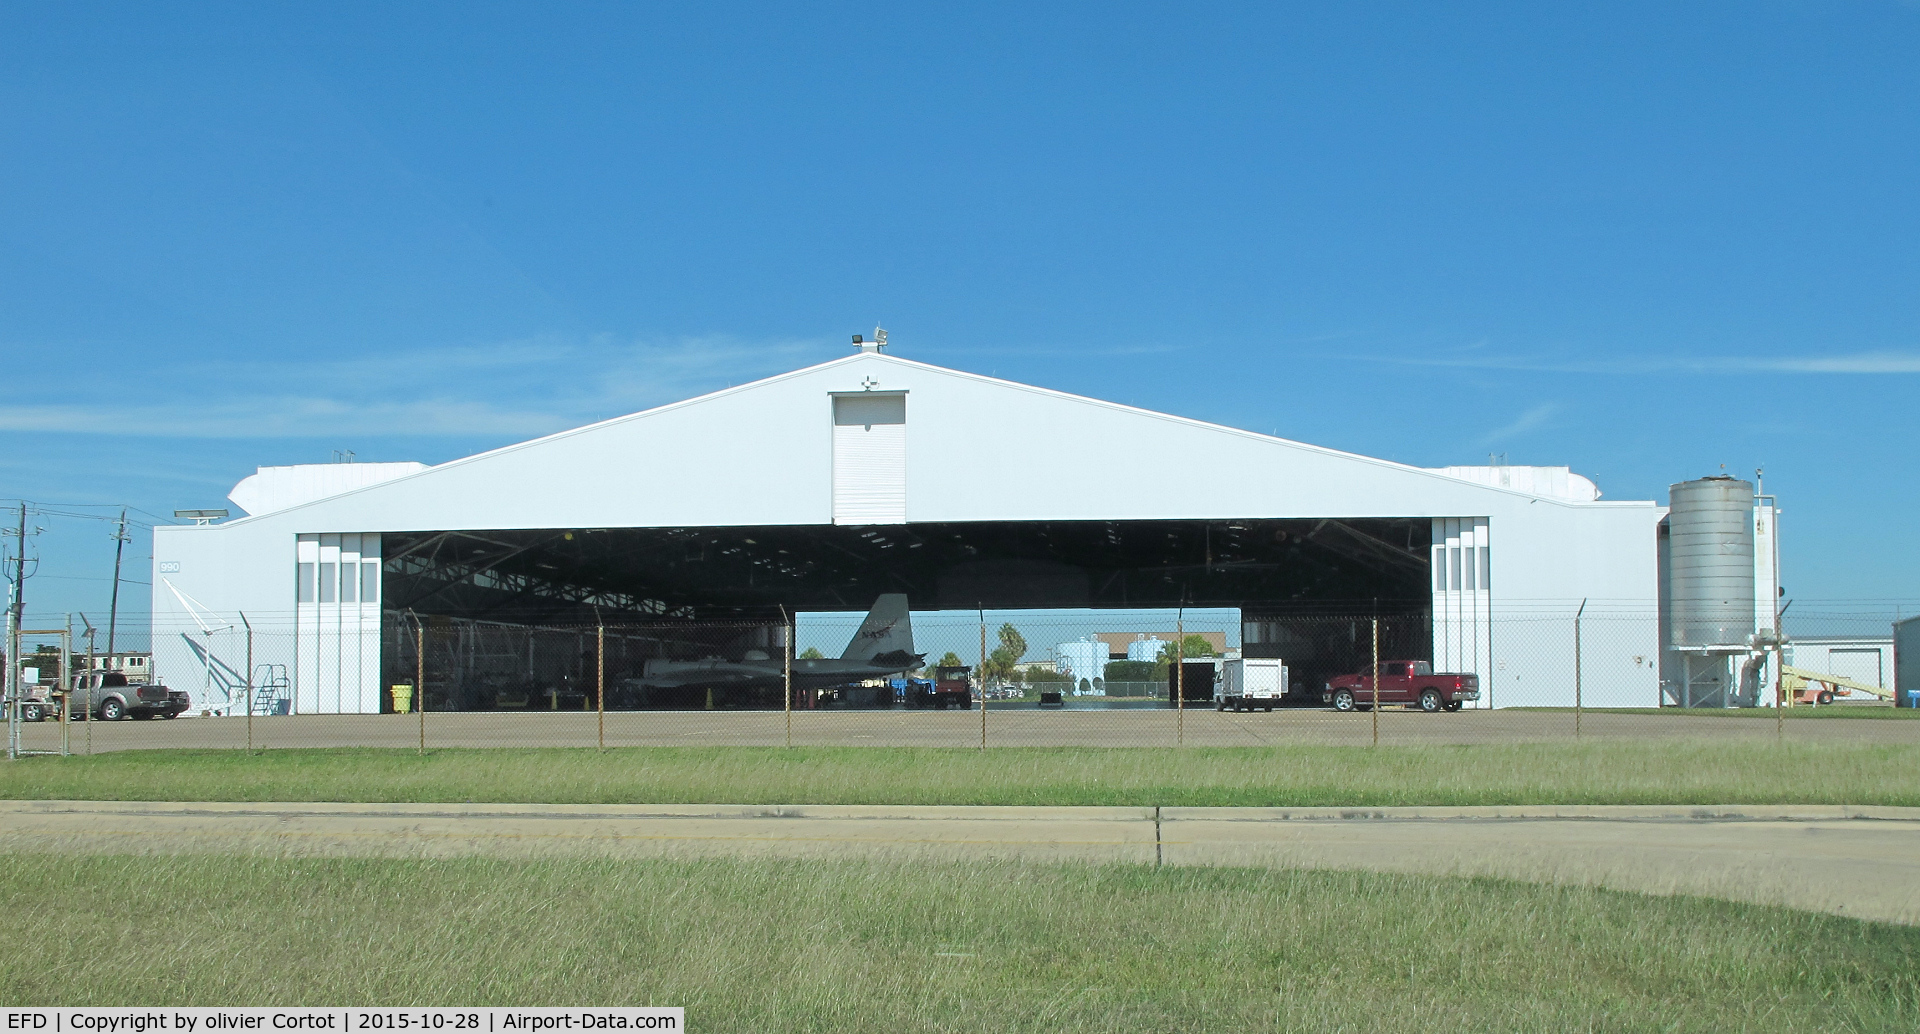 Ellington Airport (EFD) - one of the NASA hangars